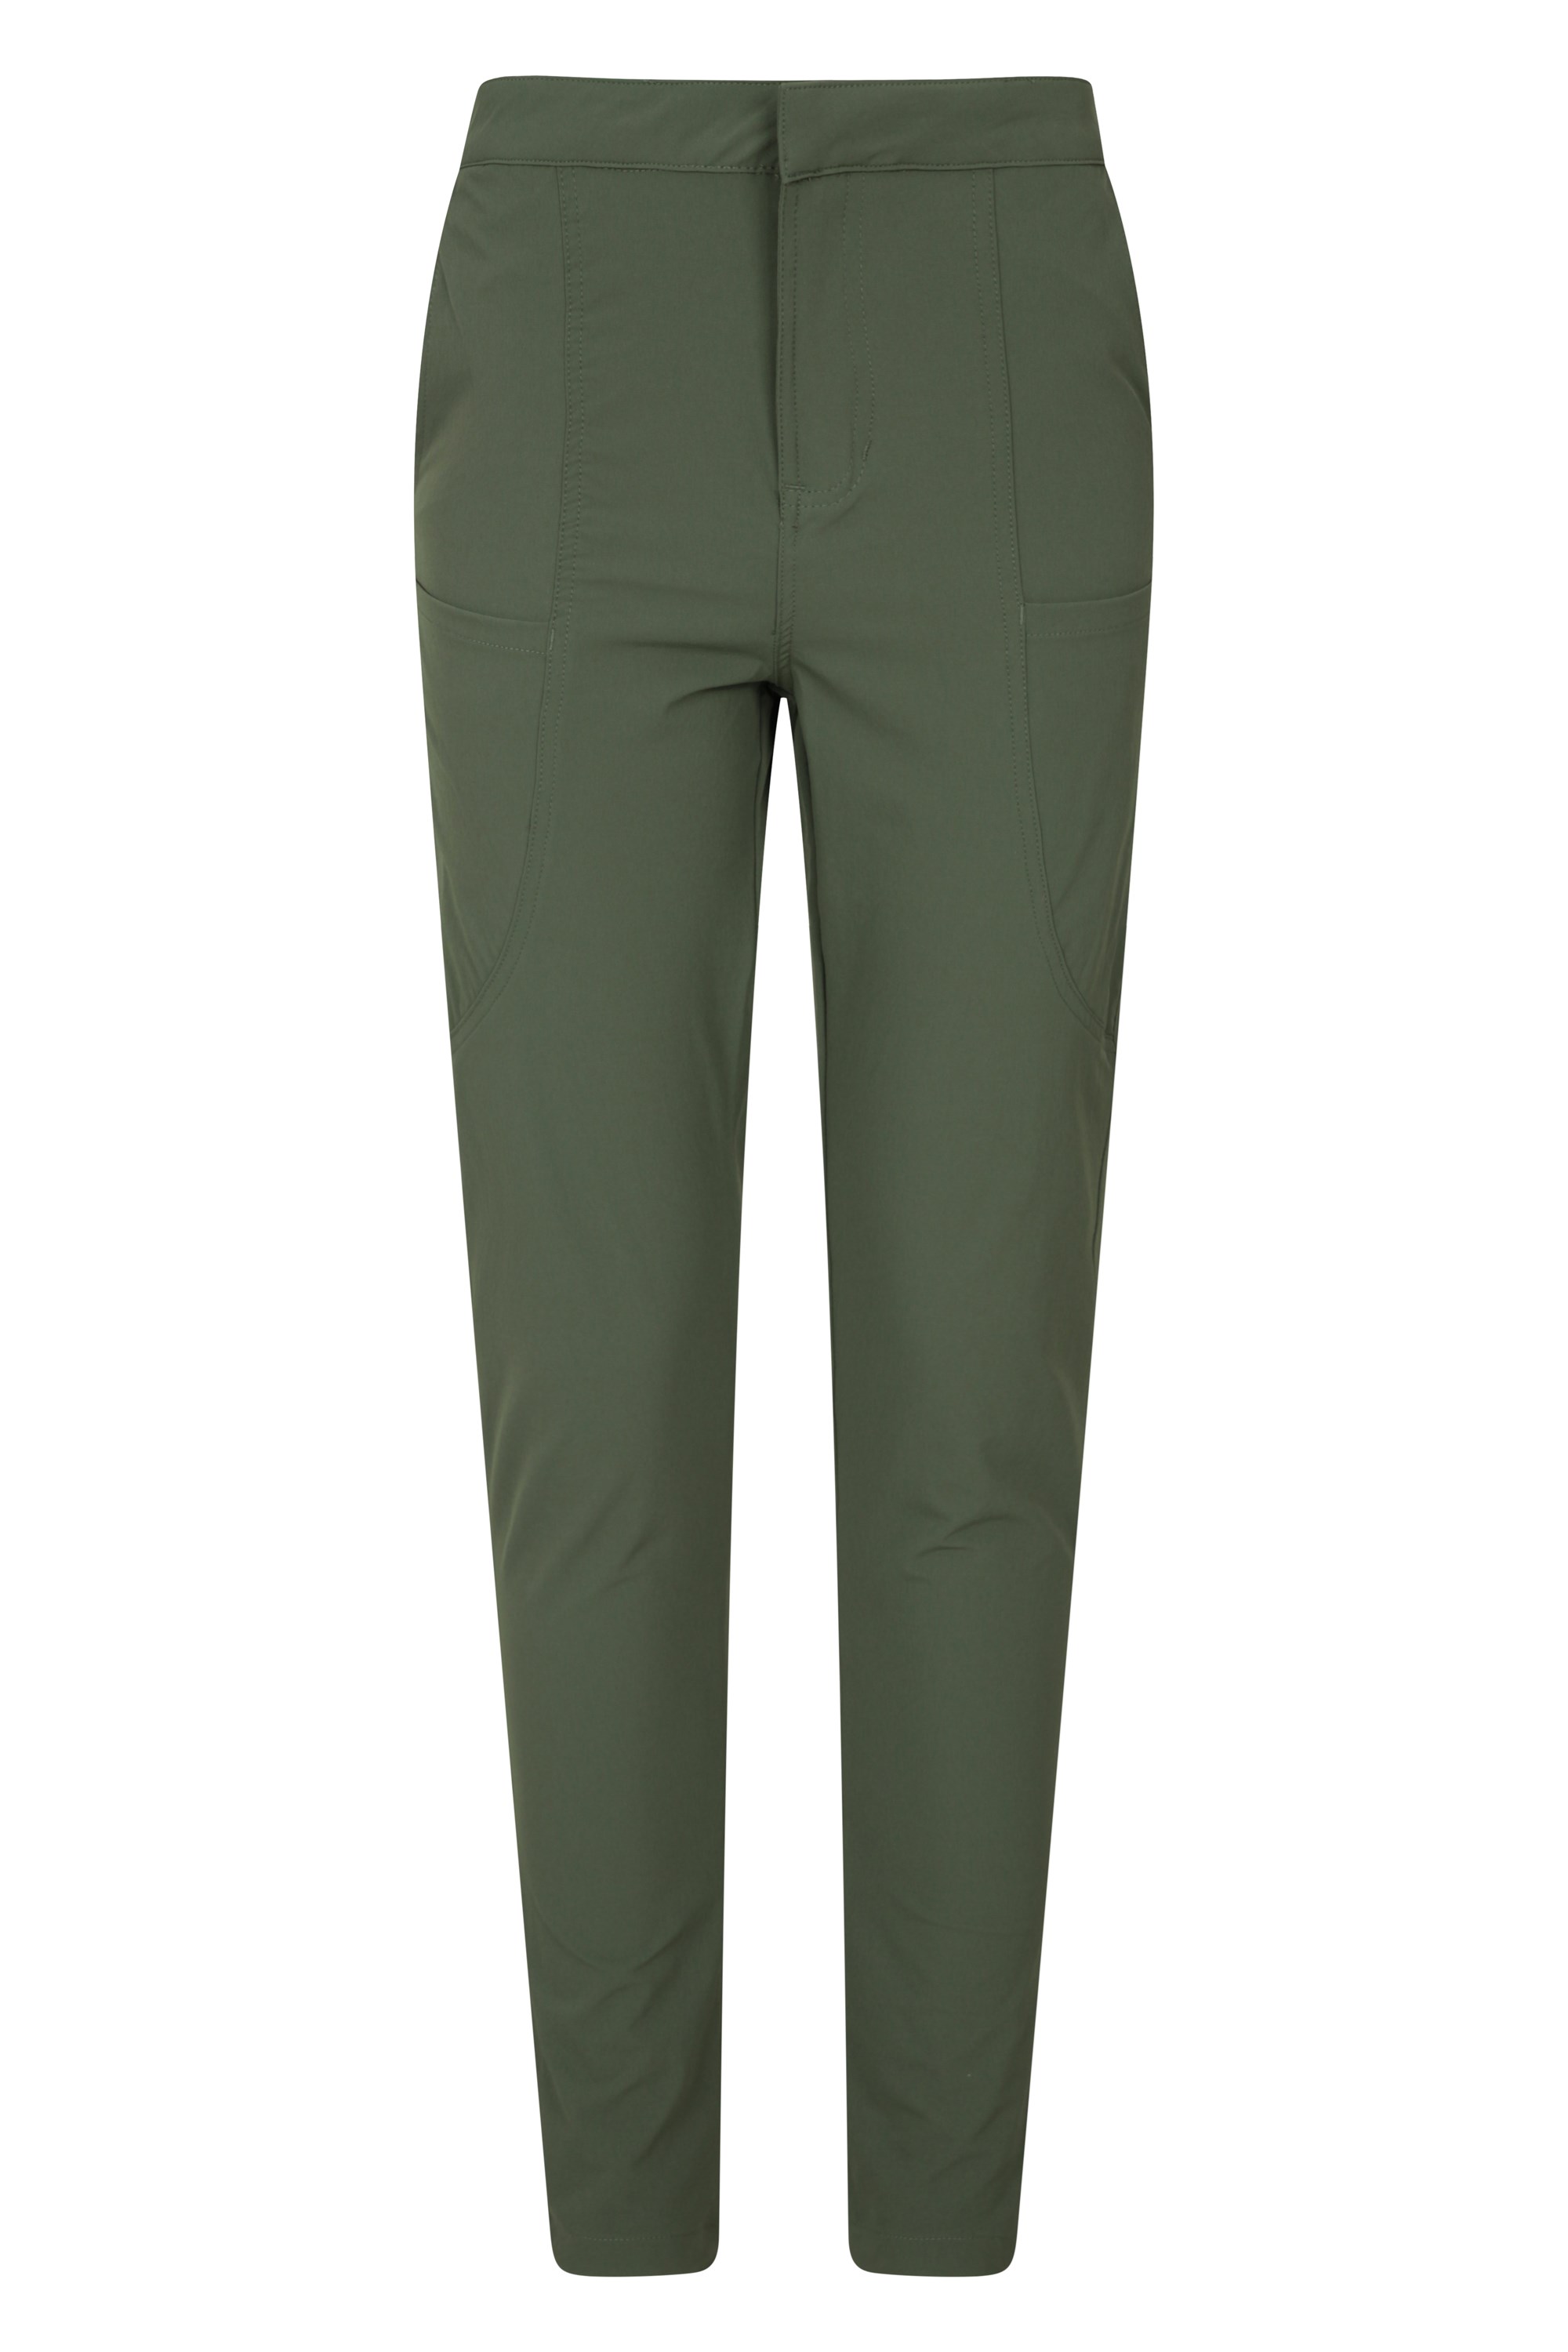 Kesugi Womens Slim Stretch Trousers - Short Length - Green